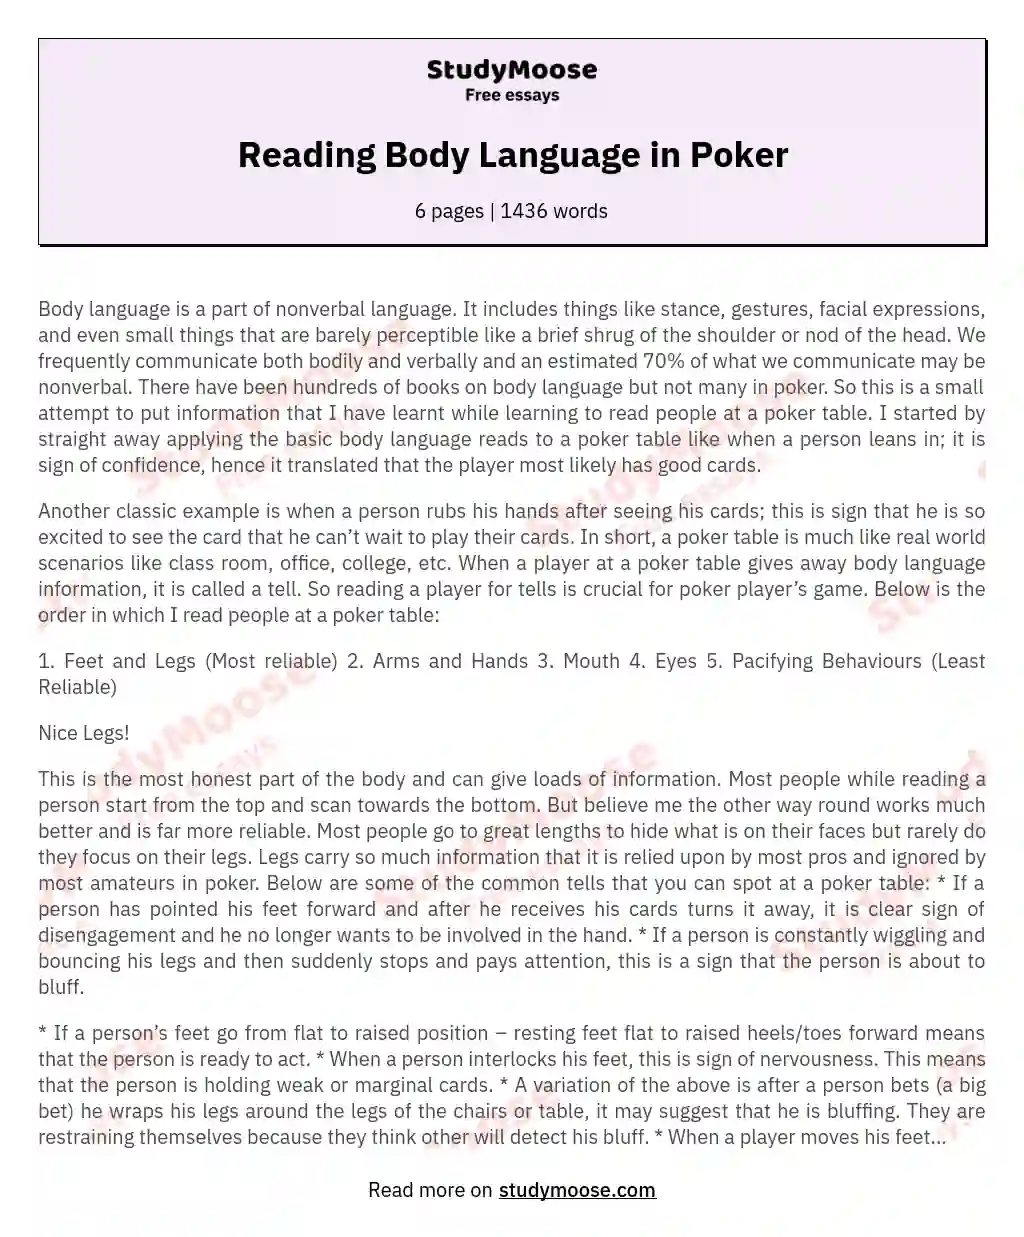 Reading Body Language in Poker essay